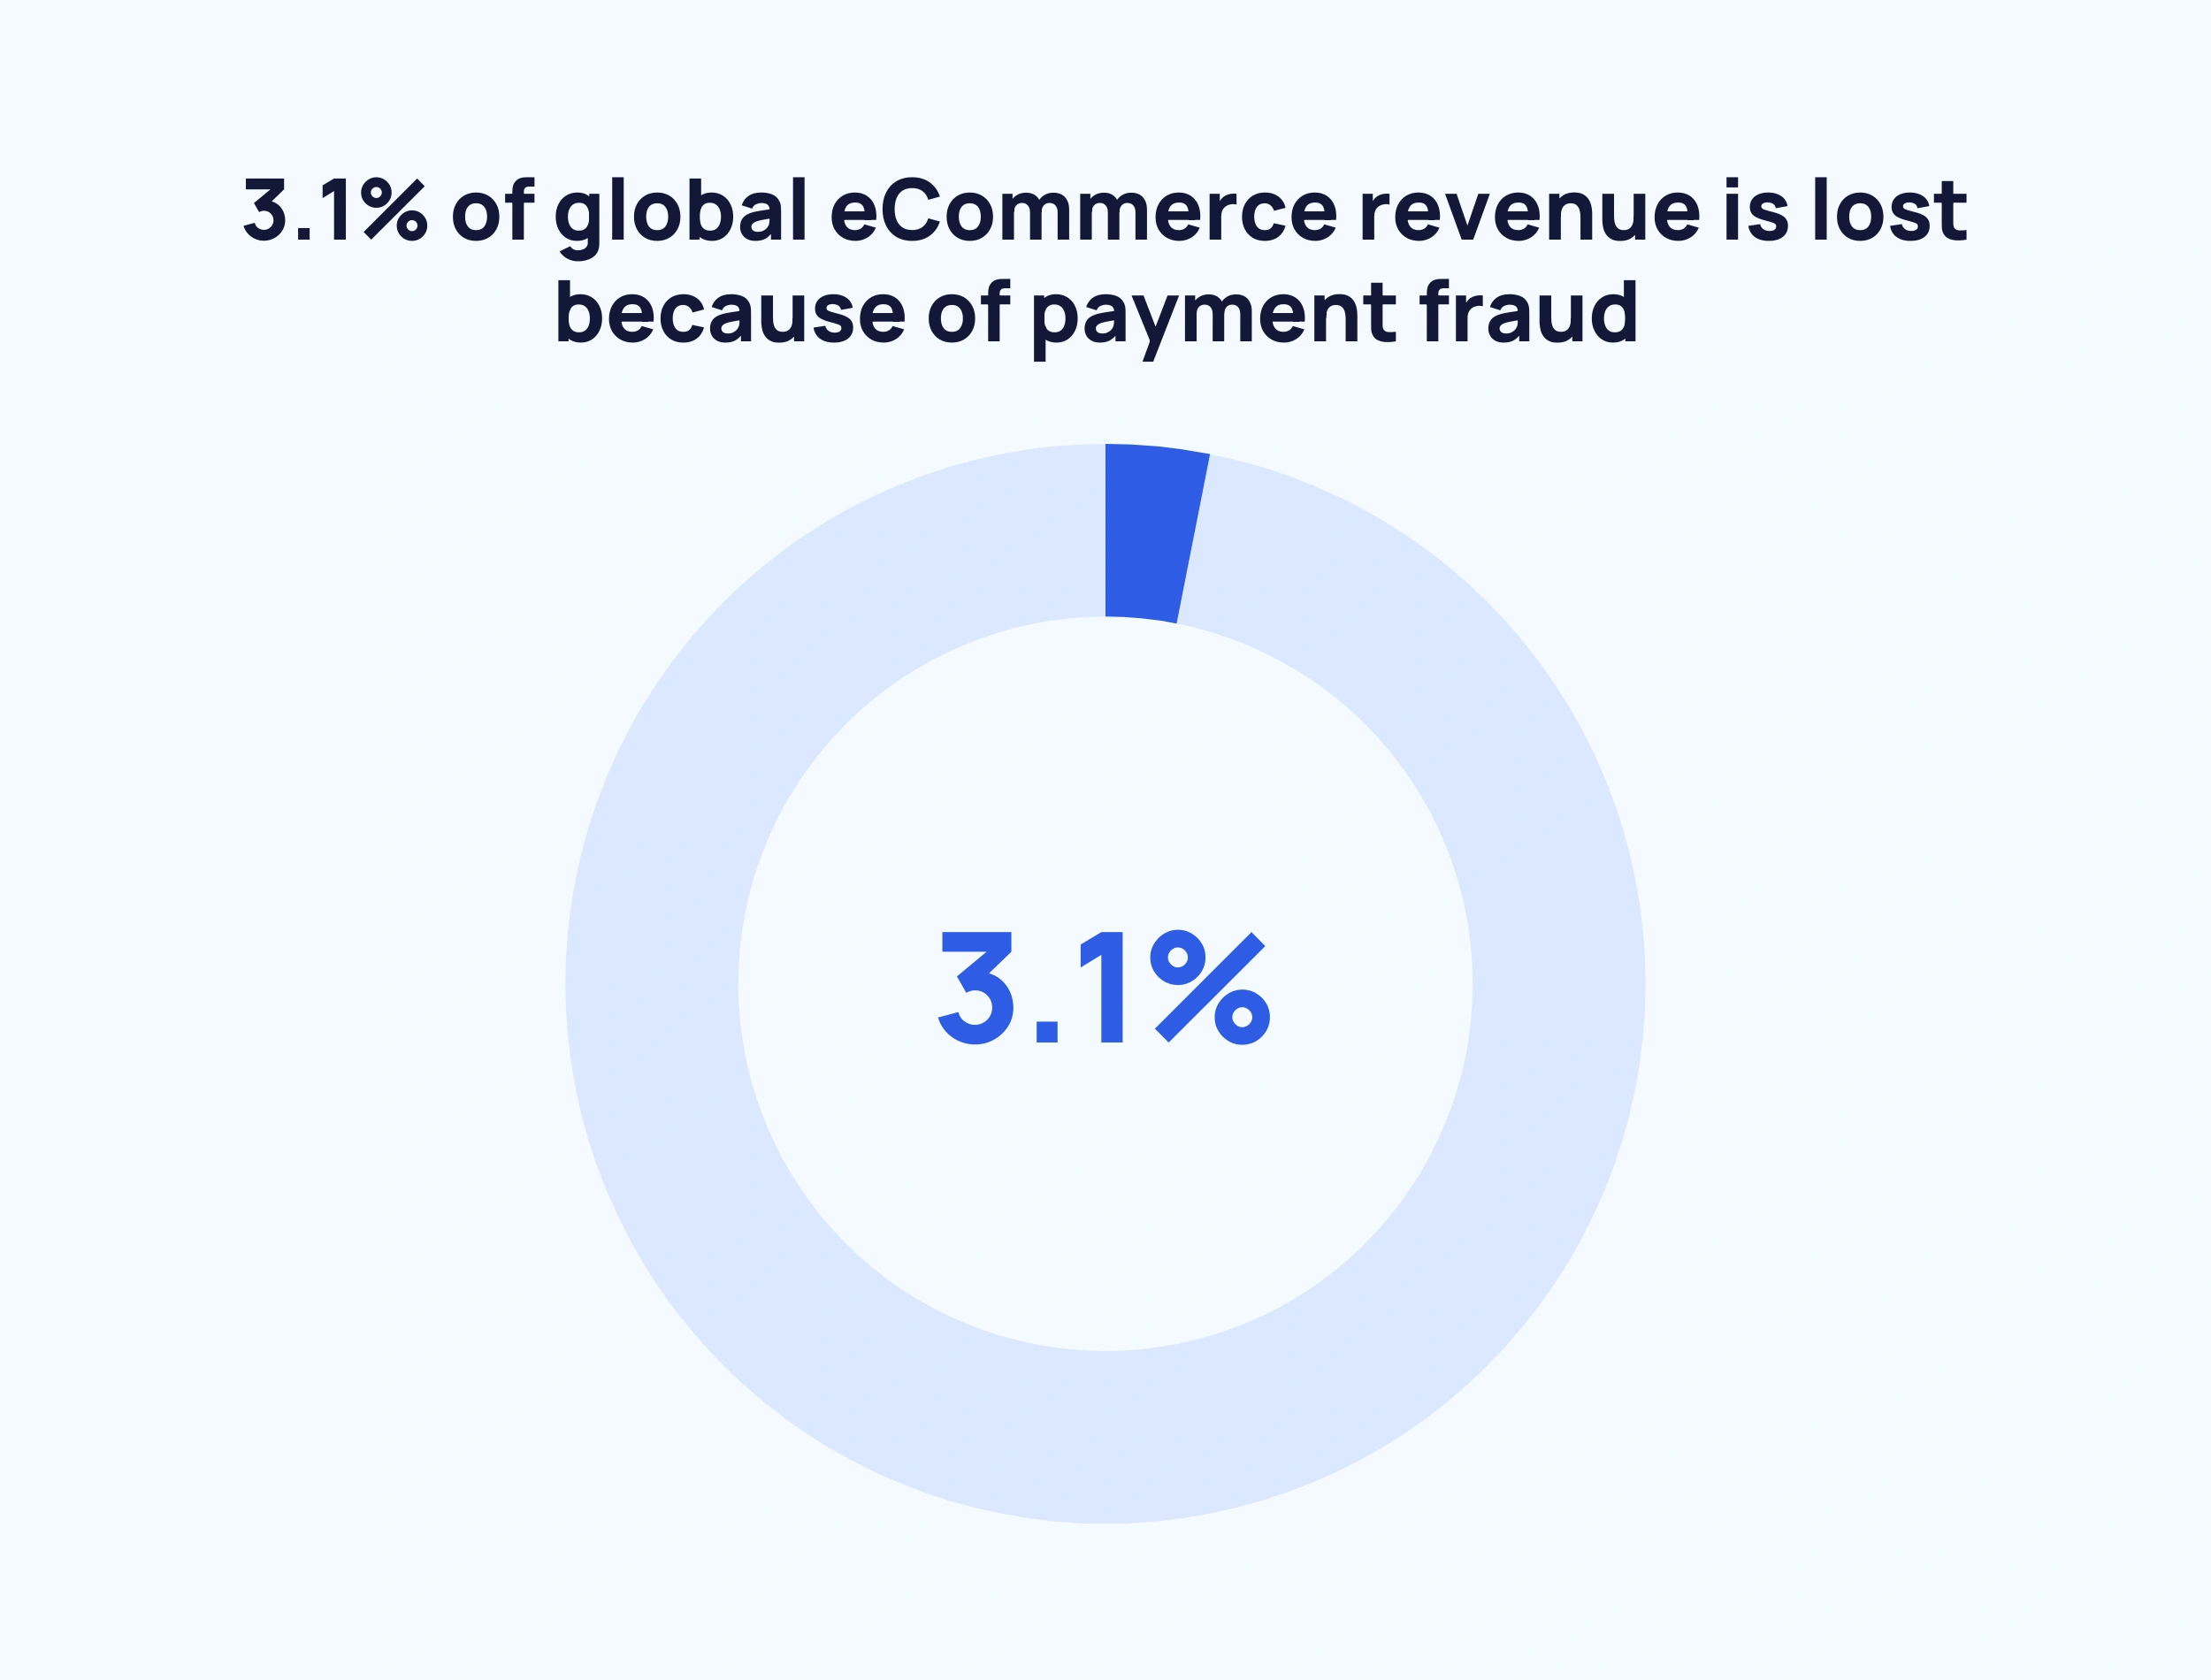 ecommerce-global-lost-revenue-min.png